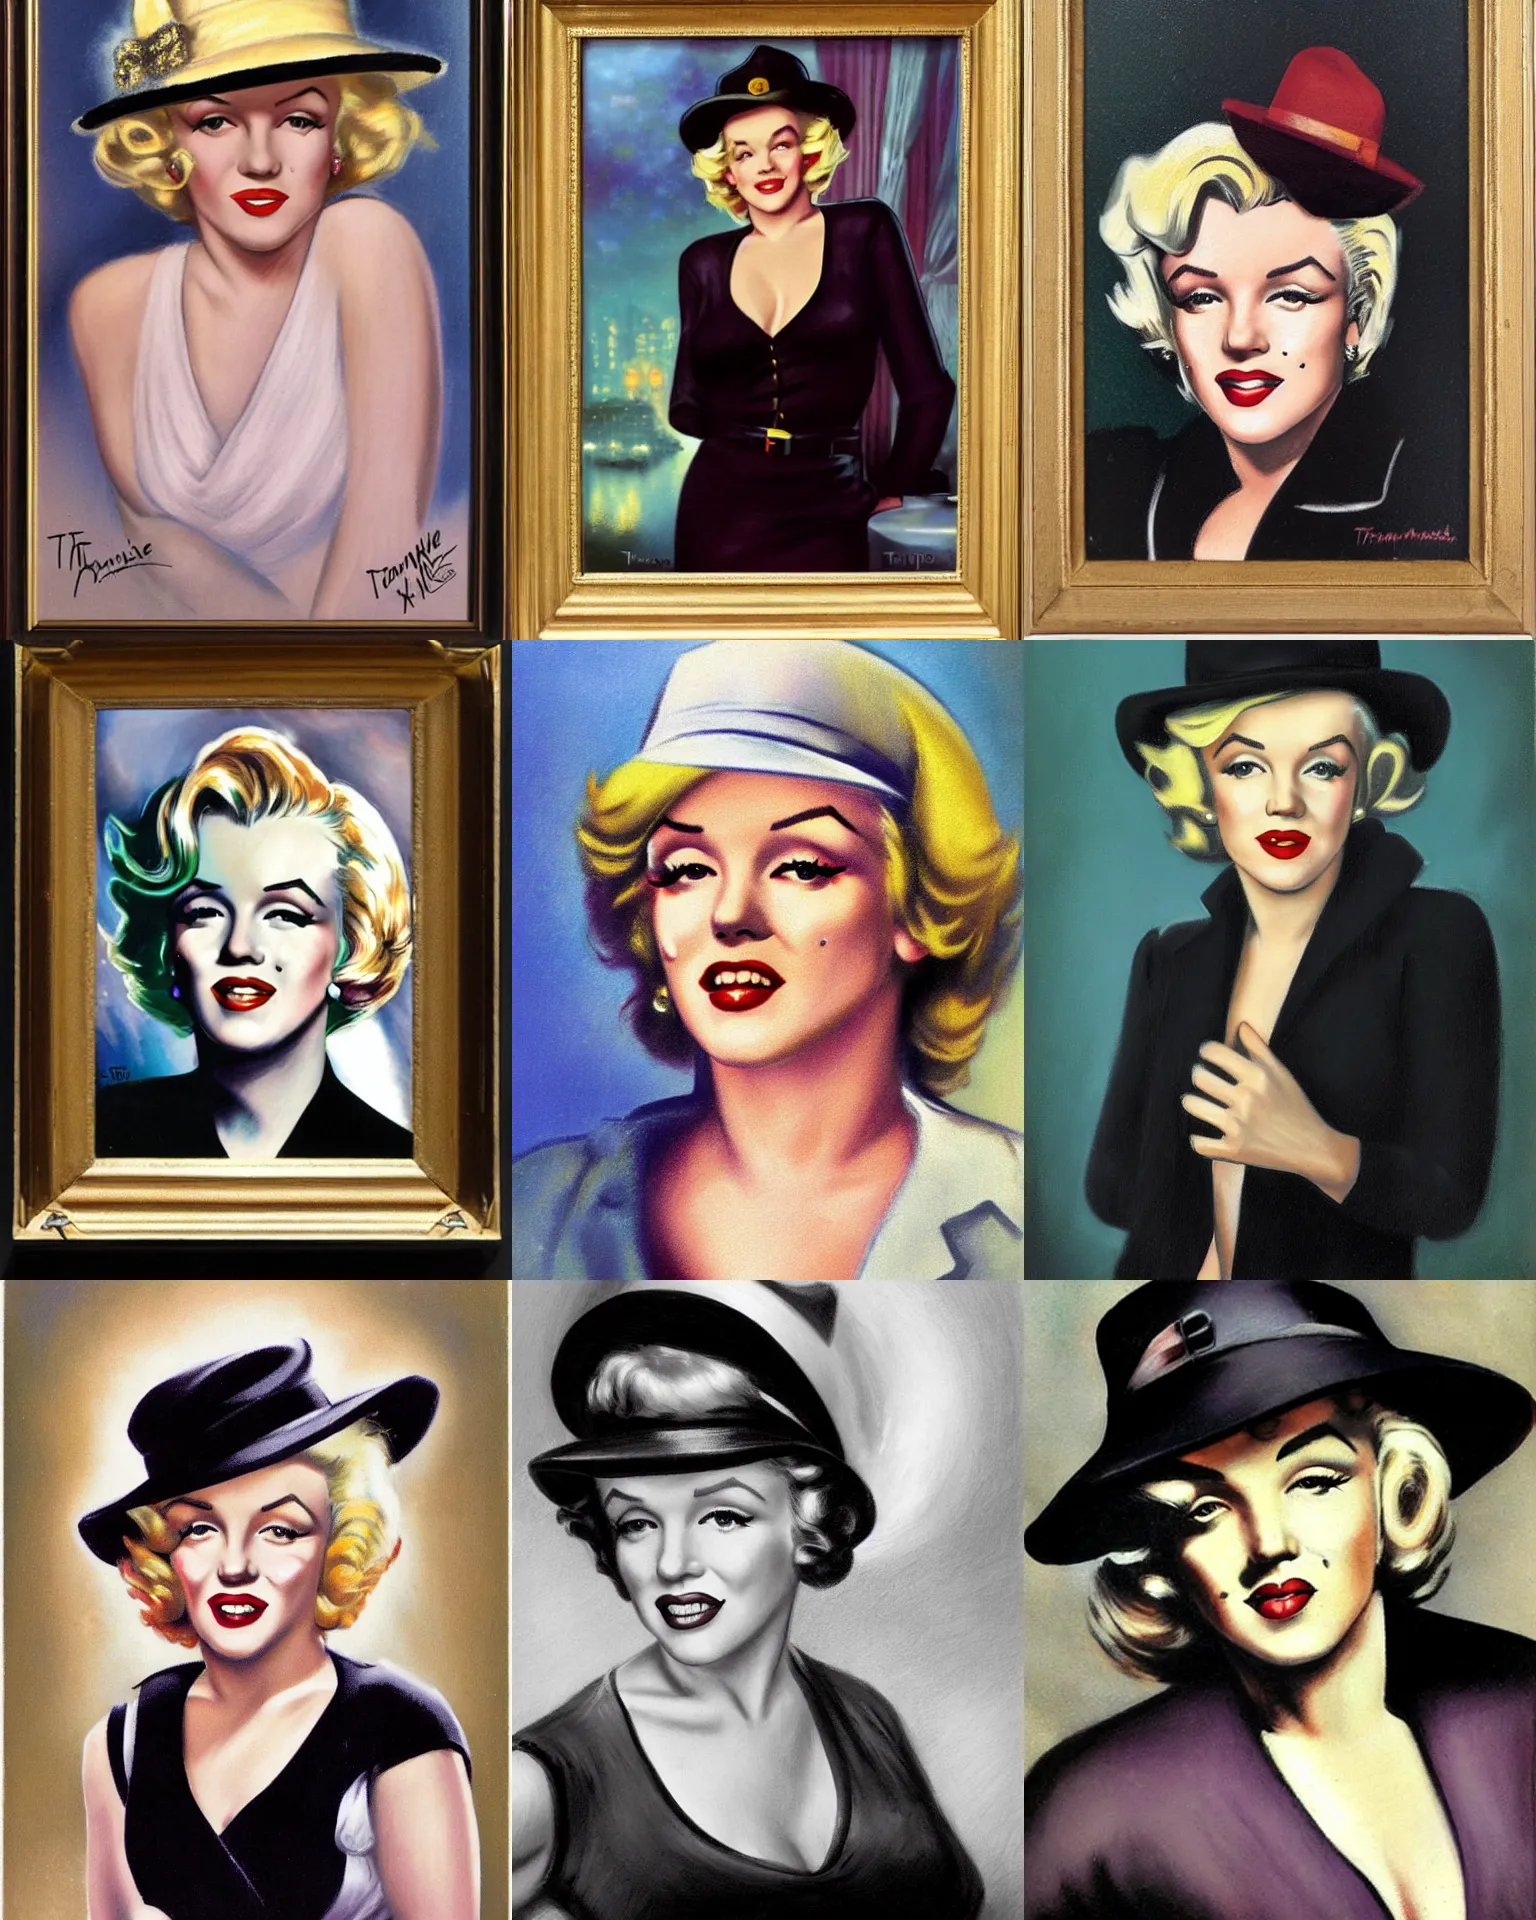 Prompt: Marilyn Monroe as Female investigator, wearing hat, 1920s, portrait by Thomas Kinkade